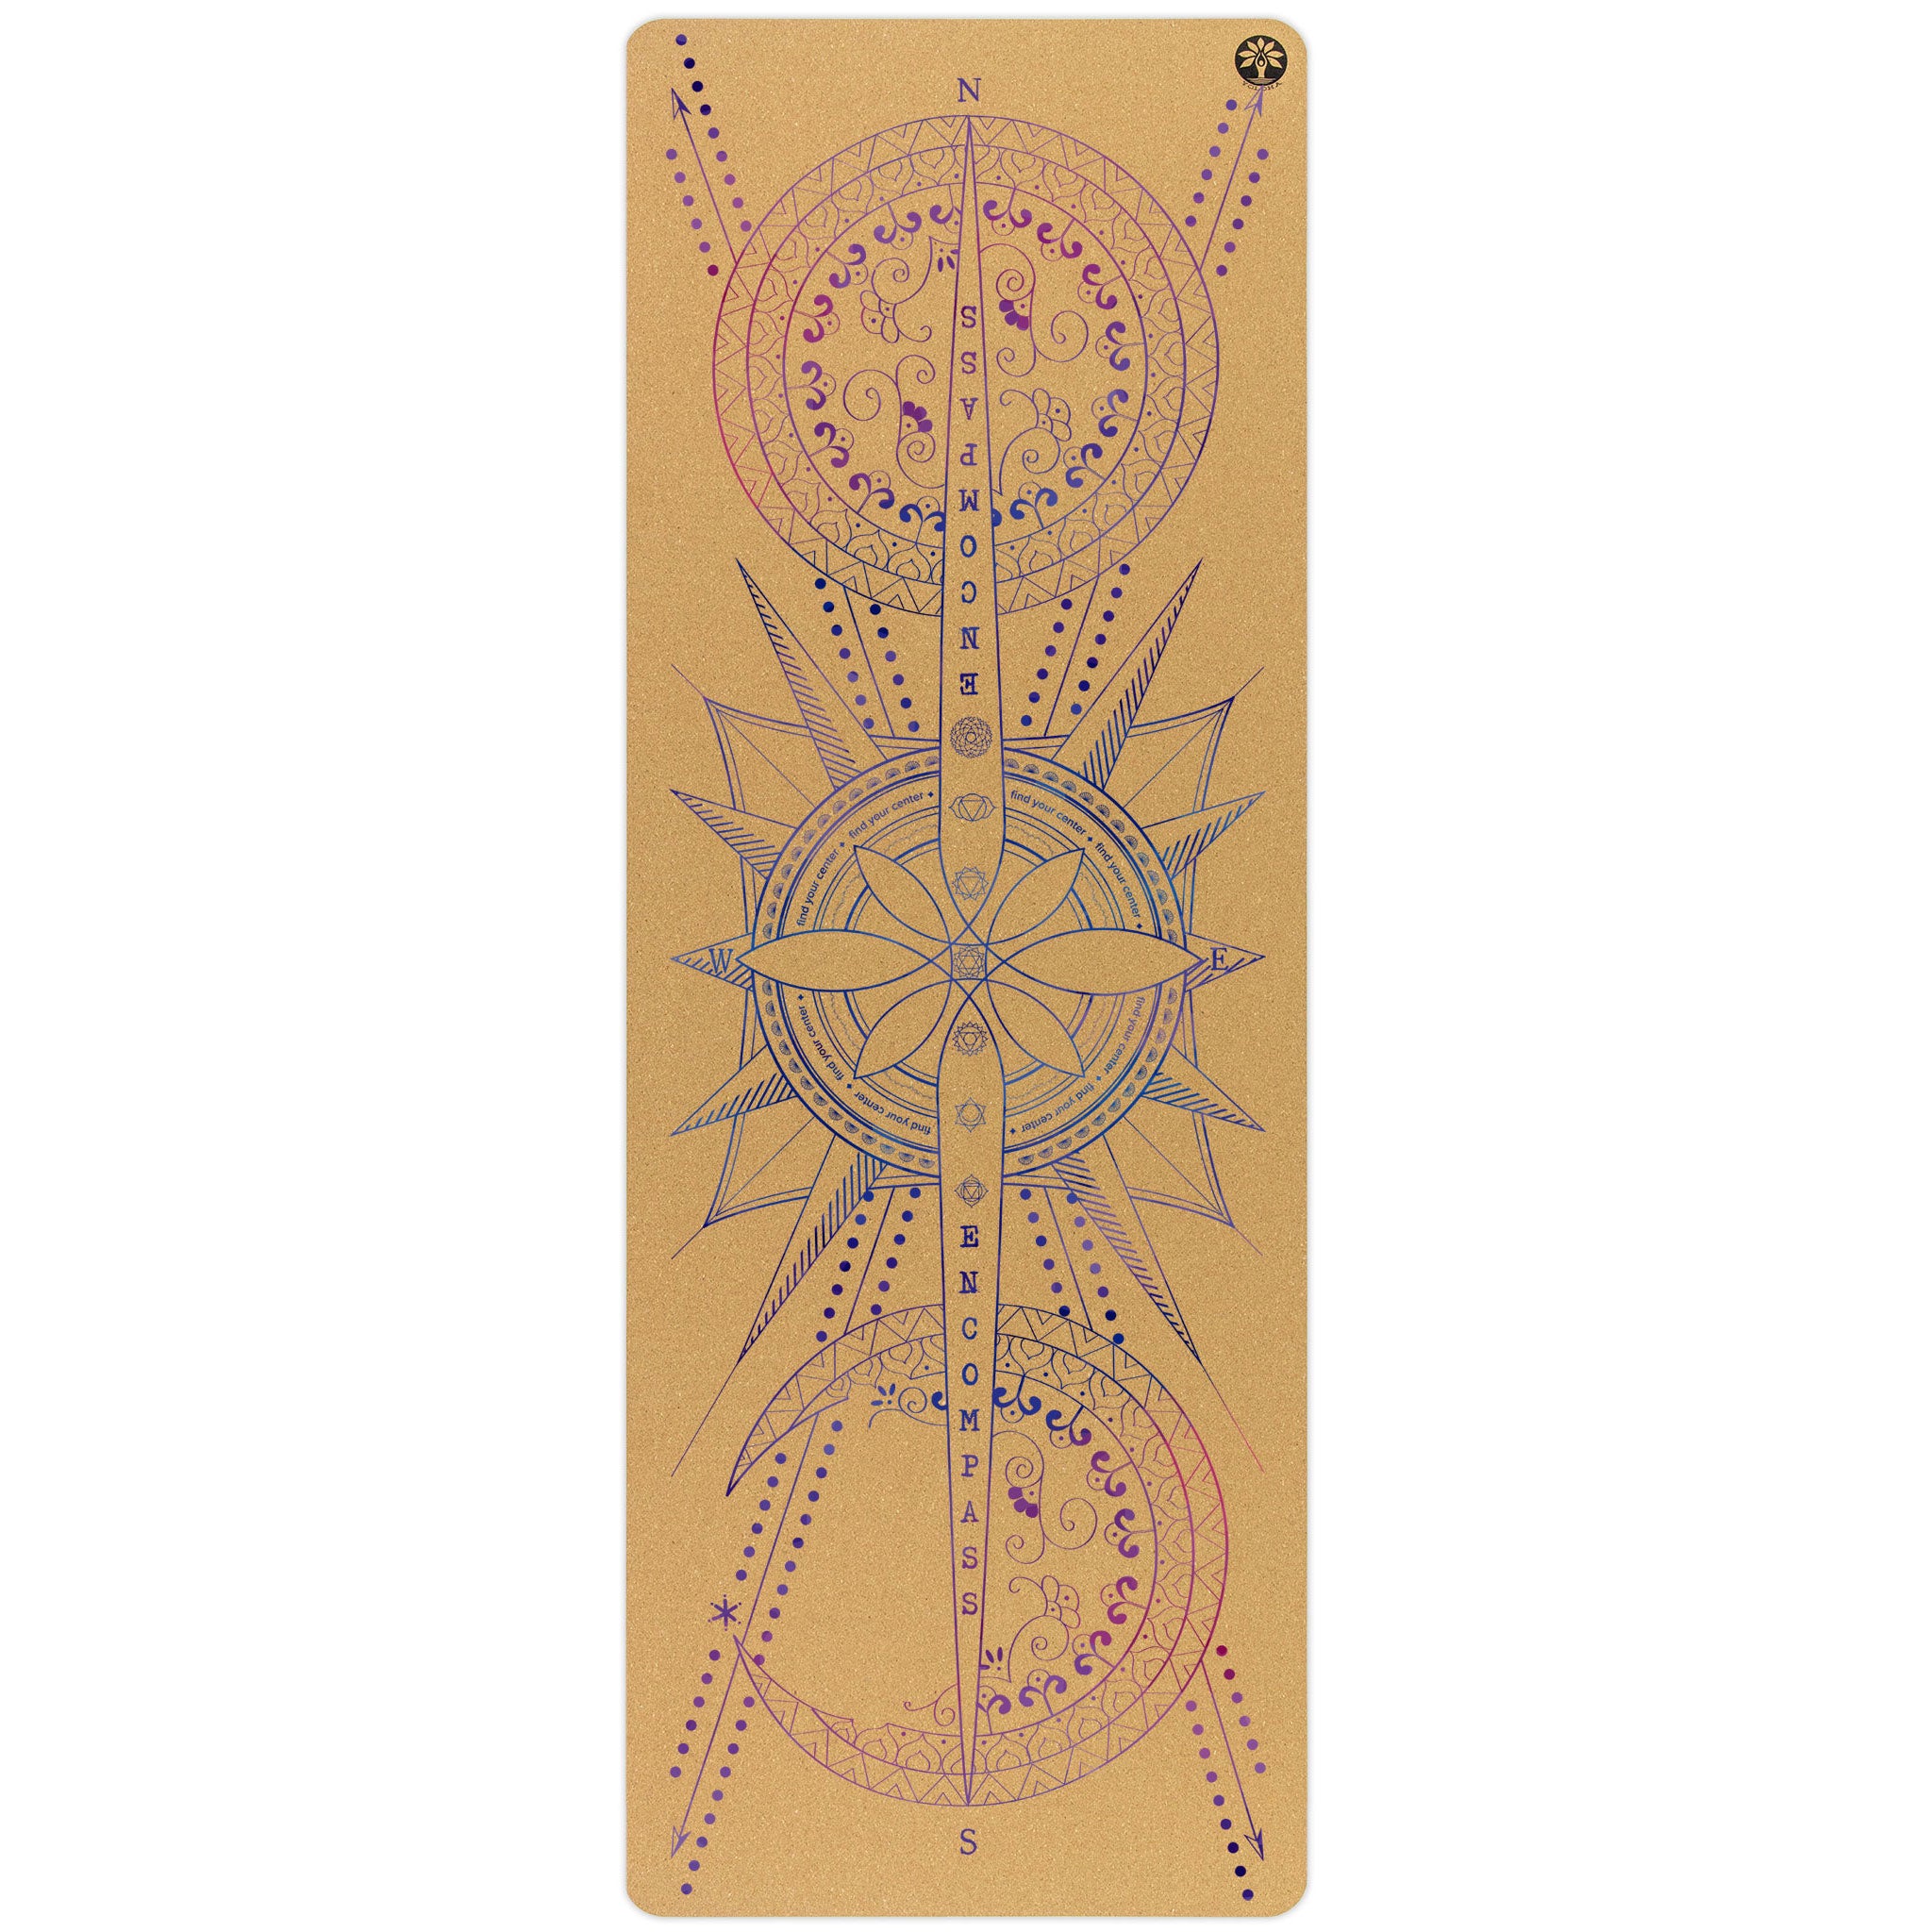 The Original Natural Non-Slip Cork Yoga Mat by Yoloha 72 x 26